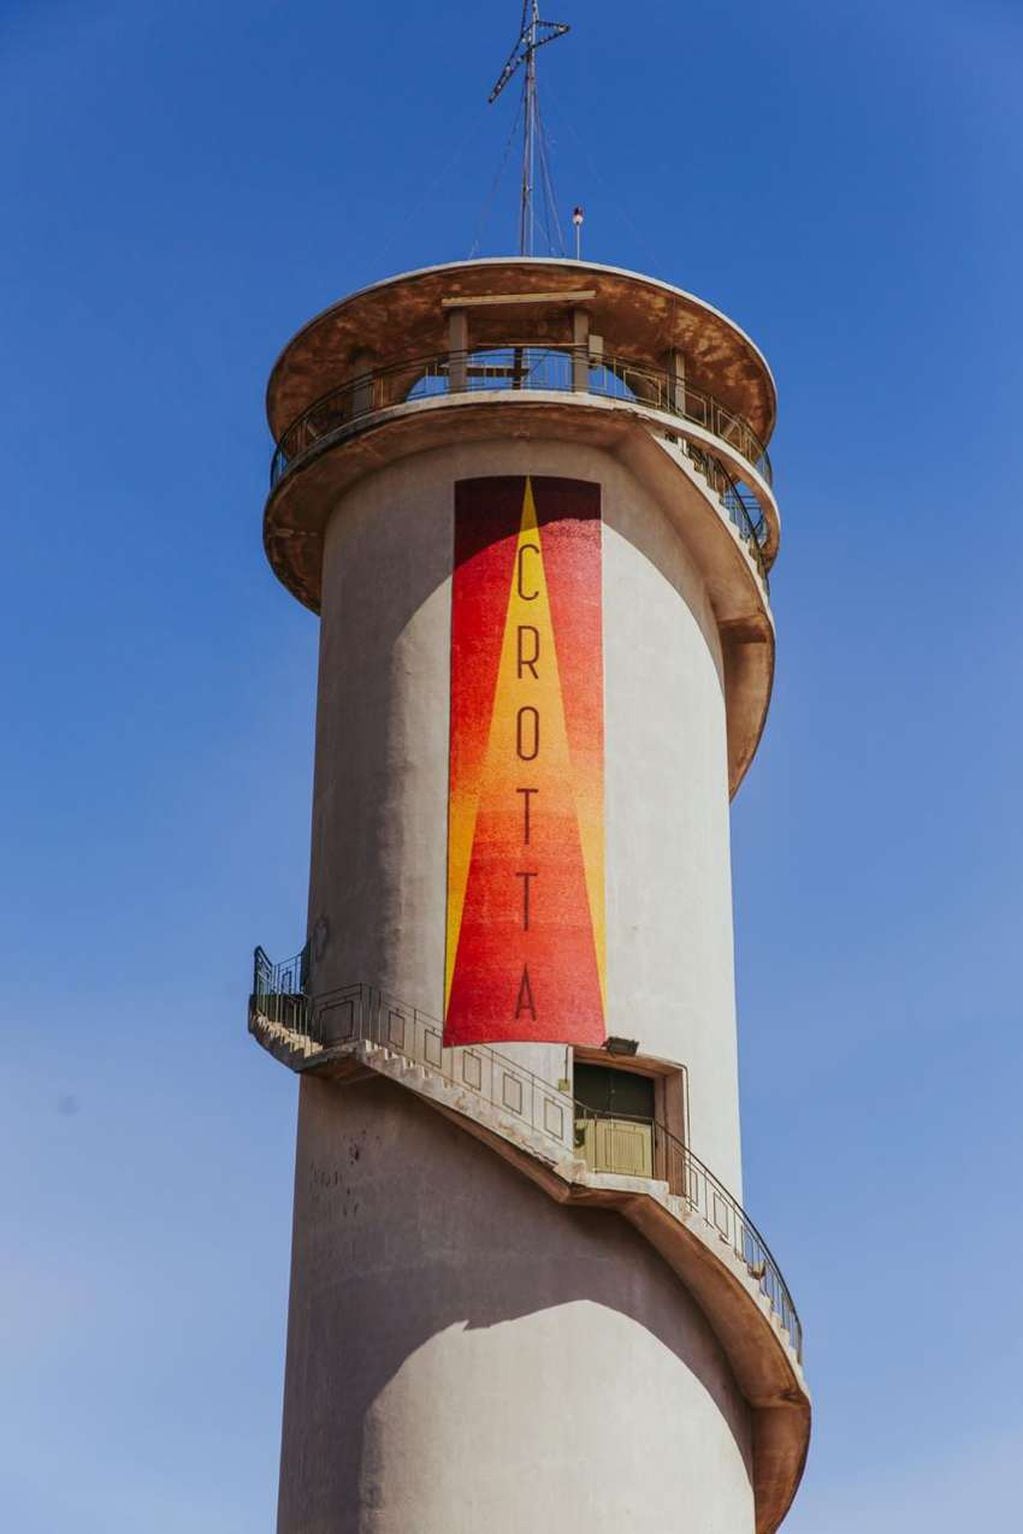 Torre de vinos de Bodega Crotta.